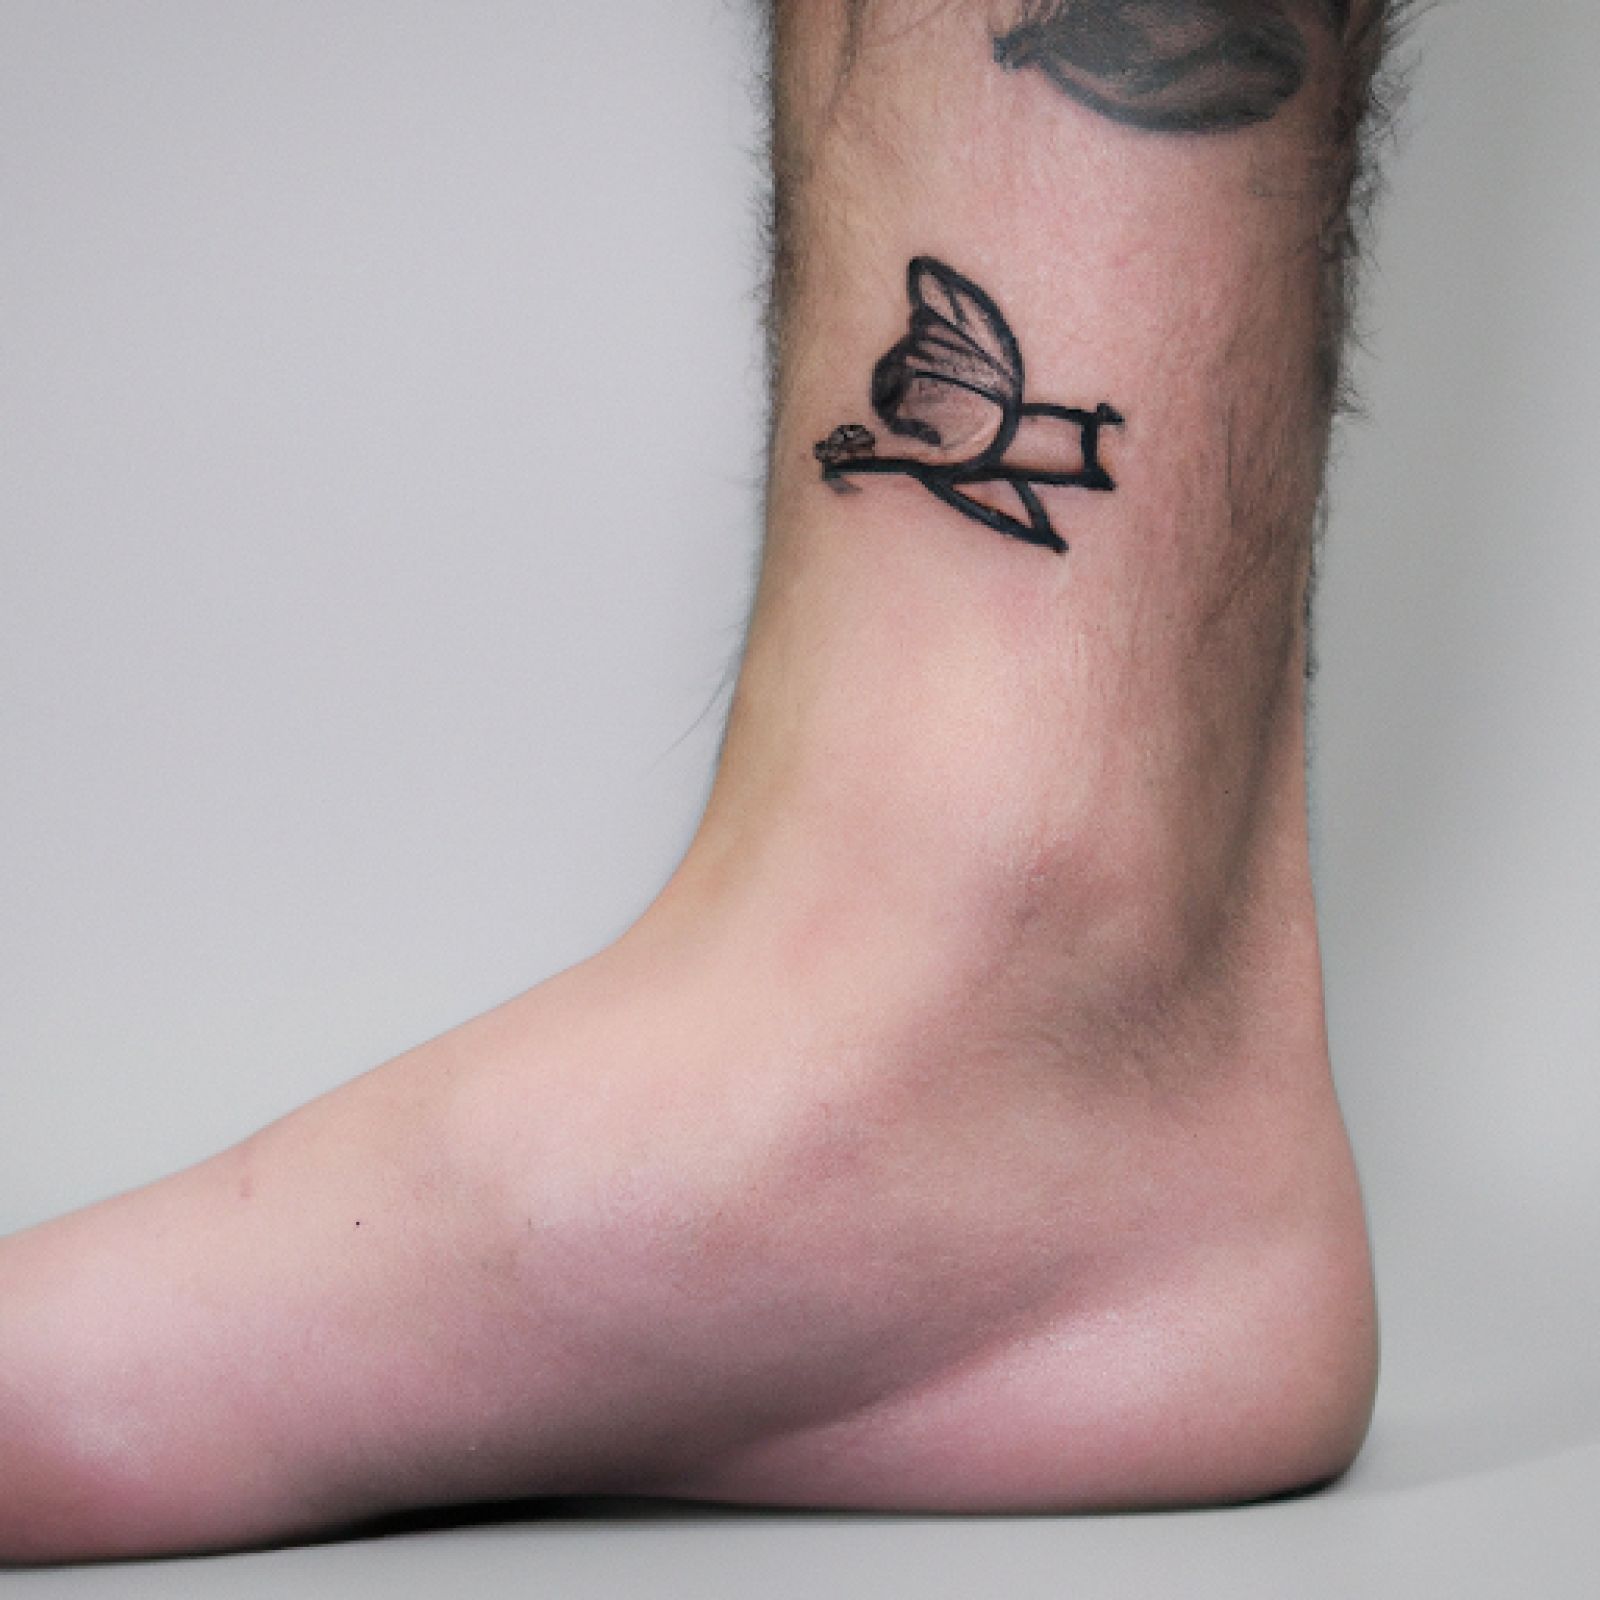 Bird tattoo on foot for men